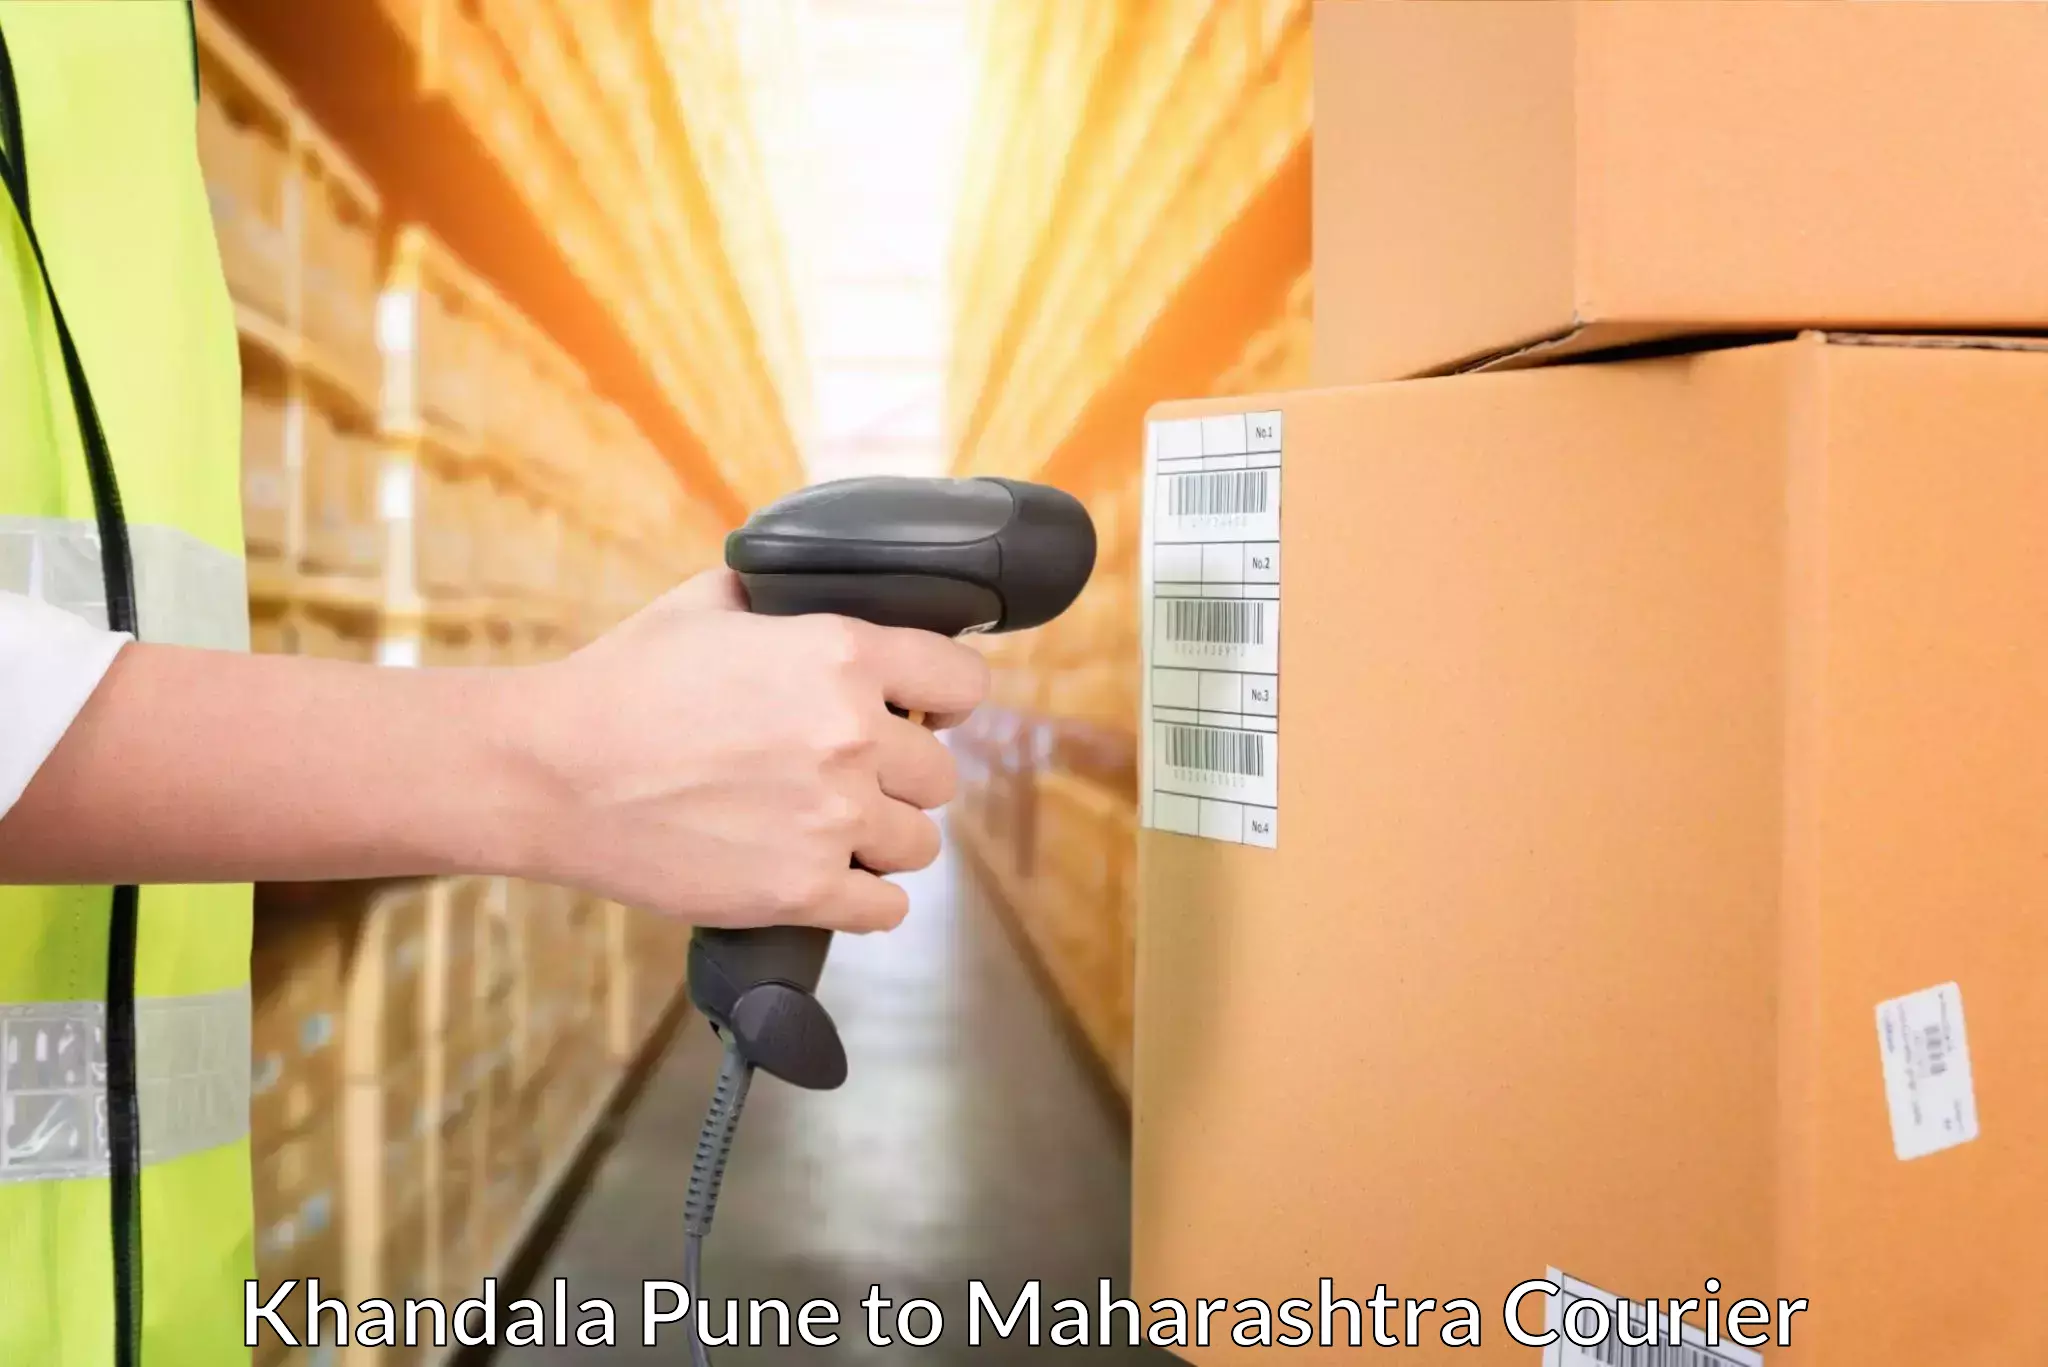 Seamless shipping experience Khandala Pune to Mumbai Port